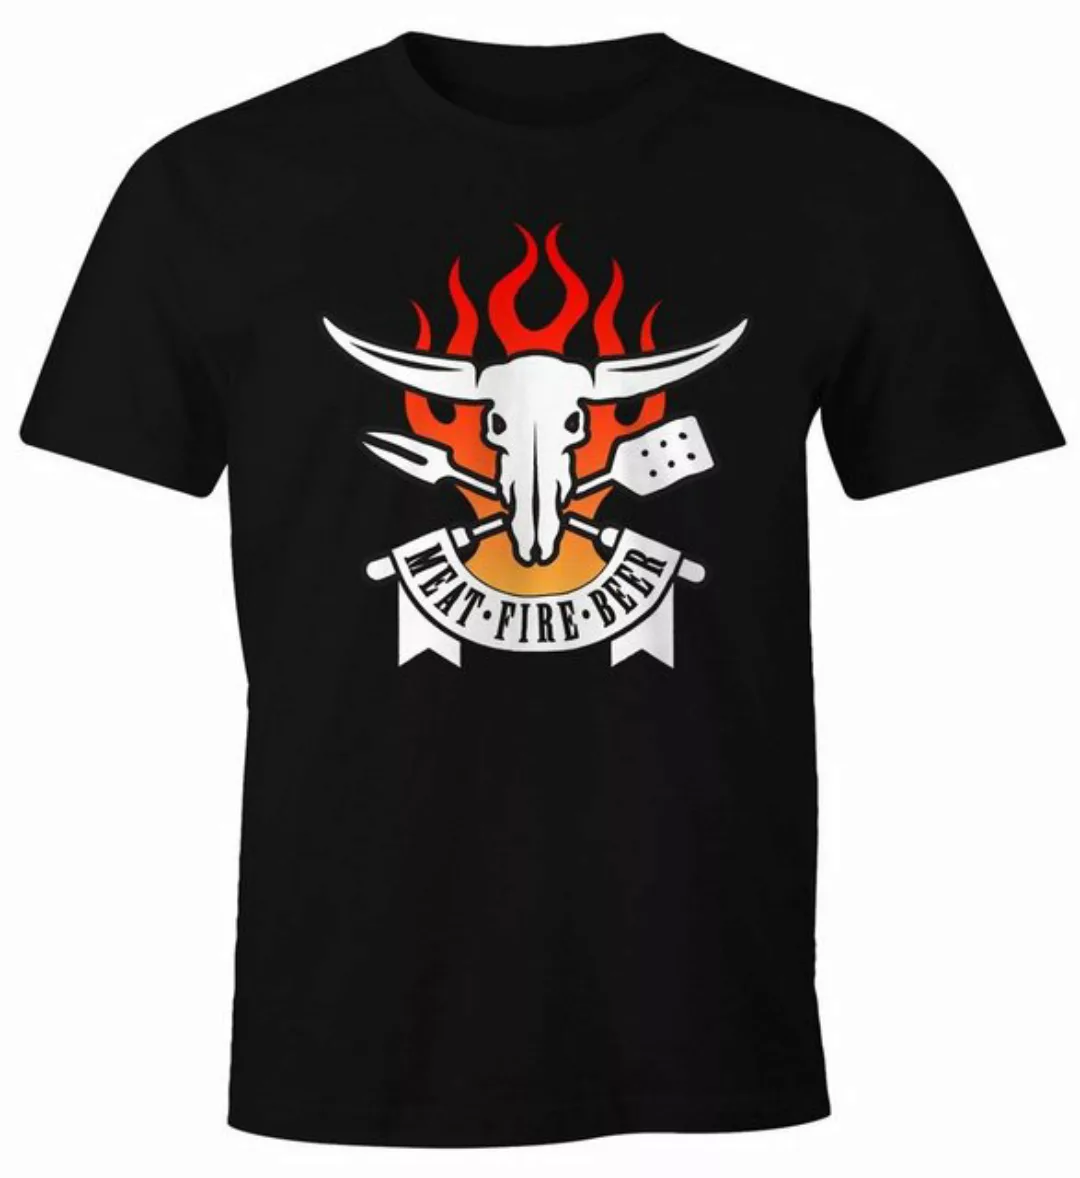 MoonWorks Print-Shirt Herren T-Shirt Meat Fire Beer Fun-Shirt Moonworks® mi günstig online kaufen